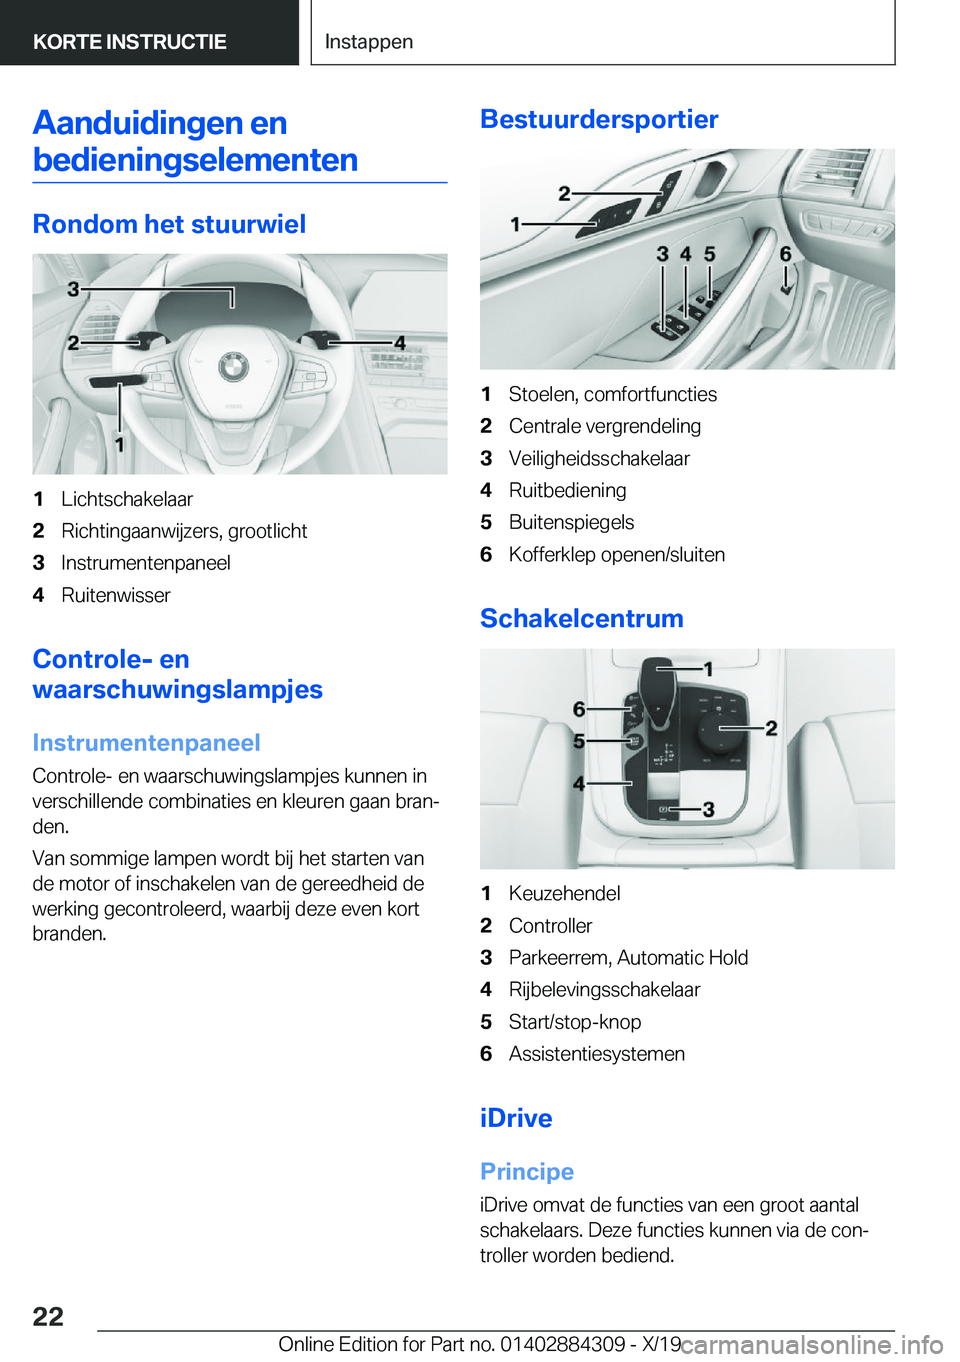 BMW 8 SERIES GRAN COUPE 2020  Instructieboekjes (in Dutch) �A�a�n�d�u�i�d�i�n�g�e�n��e�n�b�e�d�i�e�n�i�n�g�s�e�l�e�m�e�n�t�e�n
�R�o�n�d�o�m��h�e�t��s�t�u�u�r�w�i�e�l
�1�L�i�c�h�t�s�c�h�a�k�e�l�a�a�r�2�R�i�c�h�t�i�n�g�a�a�n�w�i�j�z�e�r�s�,��g�r�o�o�t�l�i�c